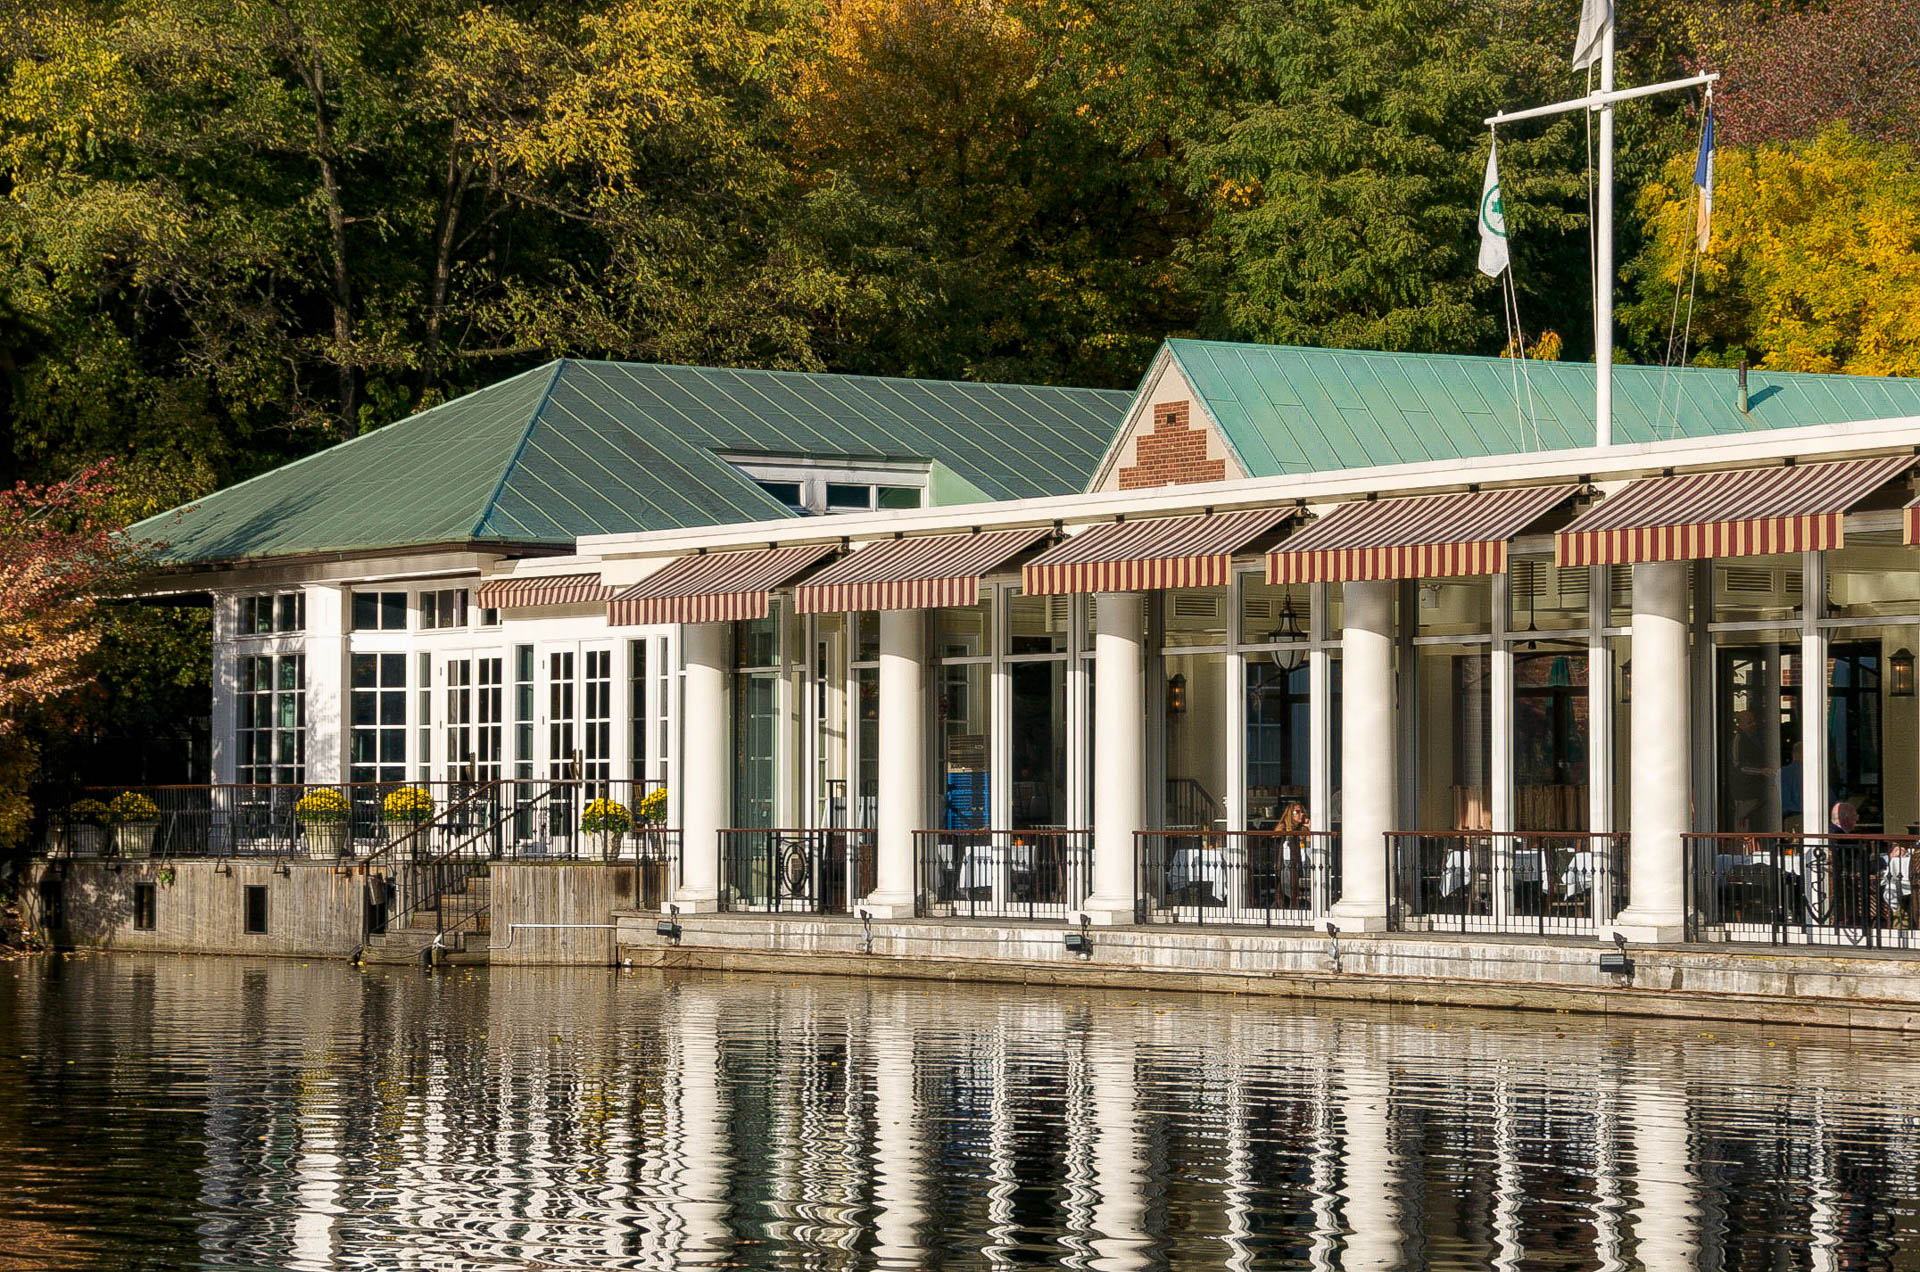 Loeb Boathouse - Lakeside restaurant in Central Park